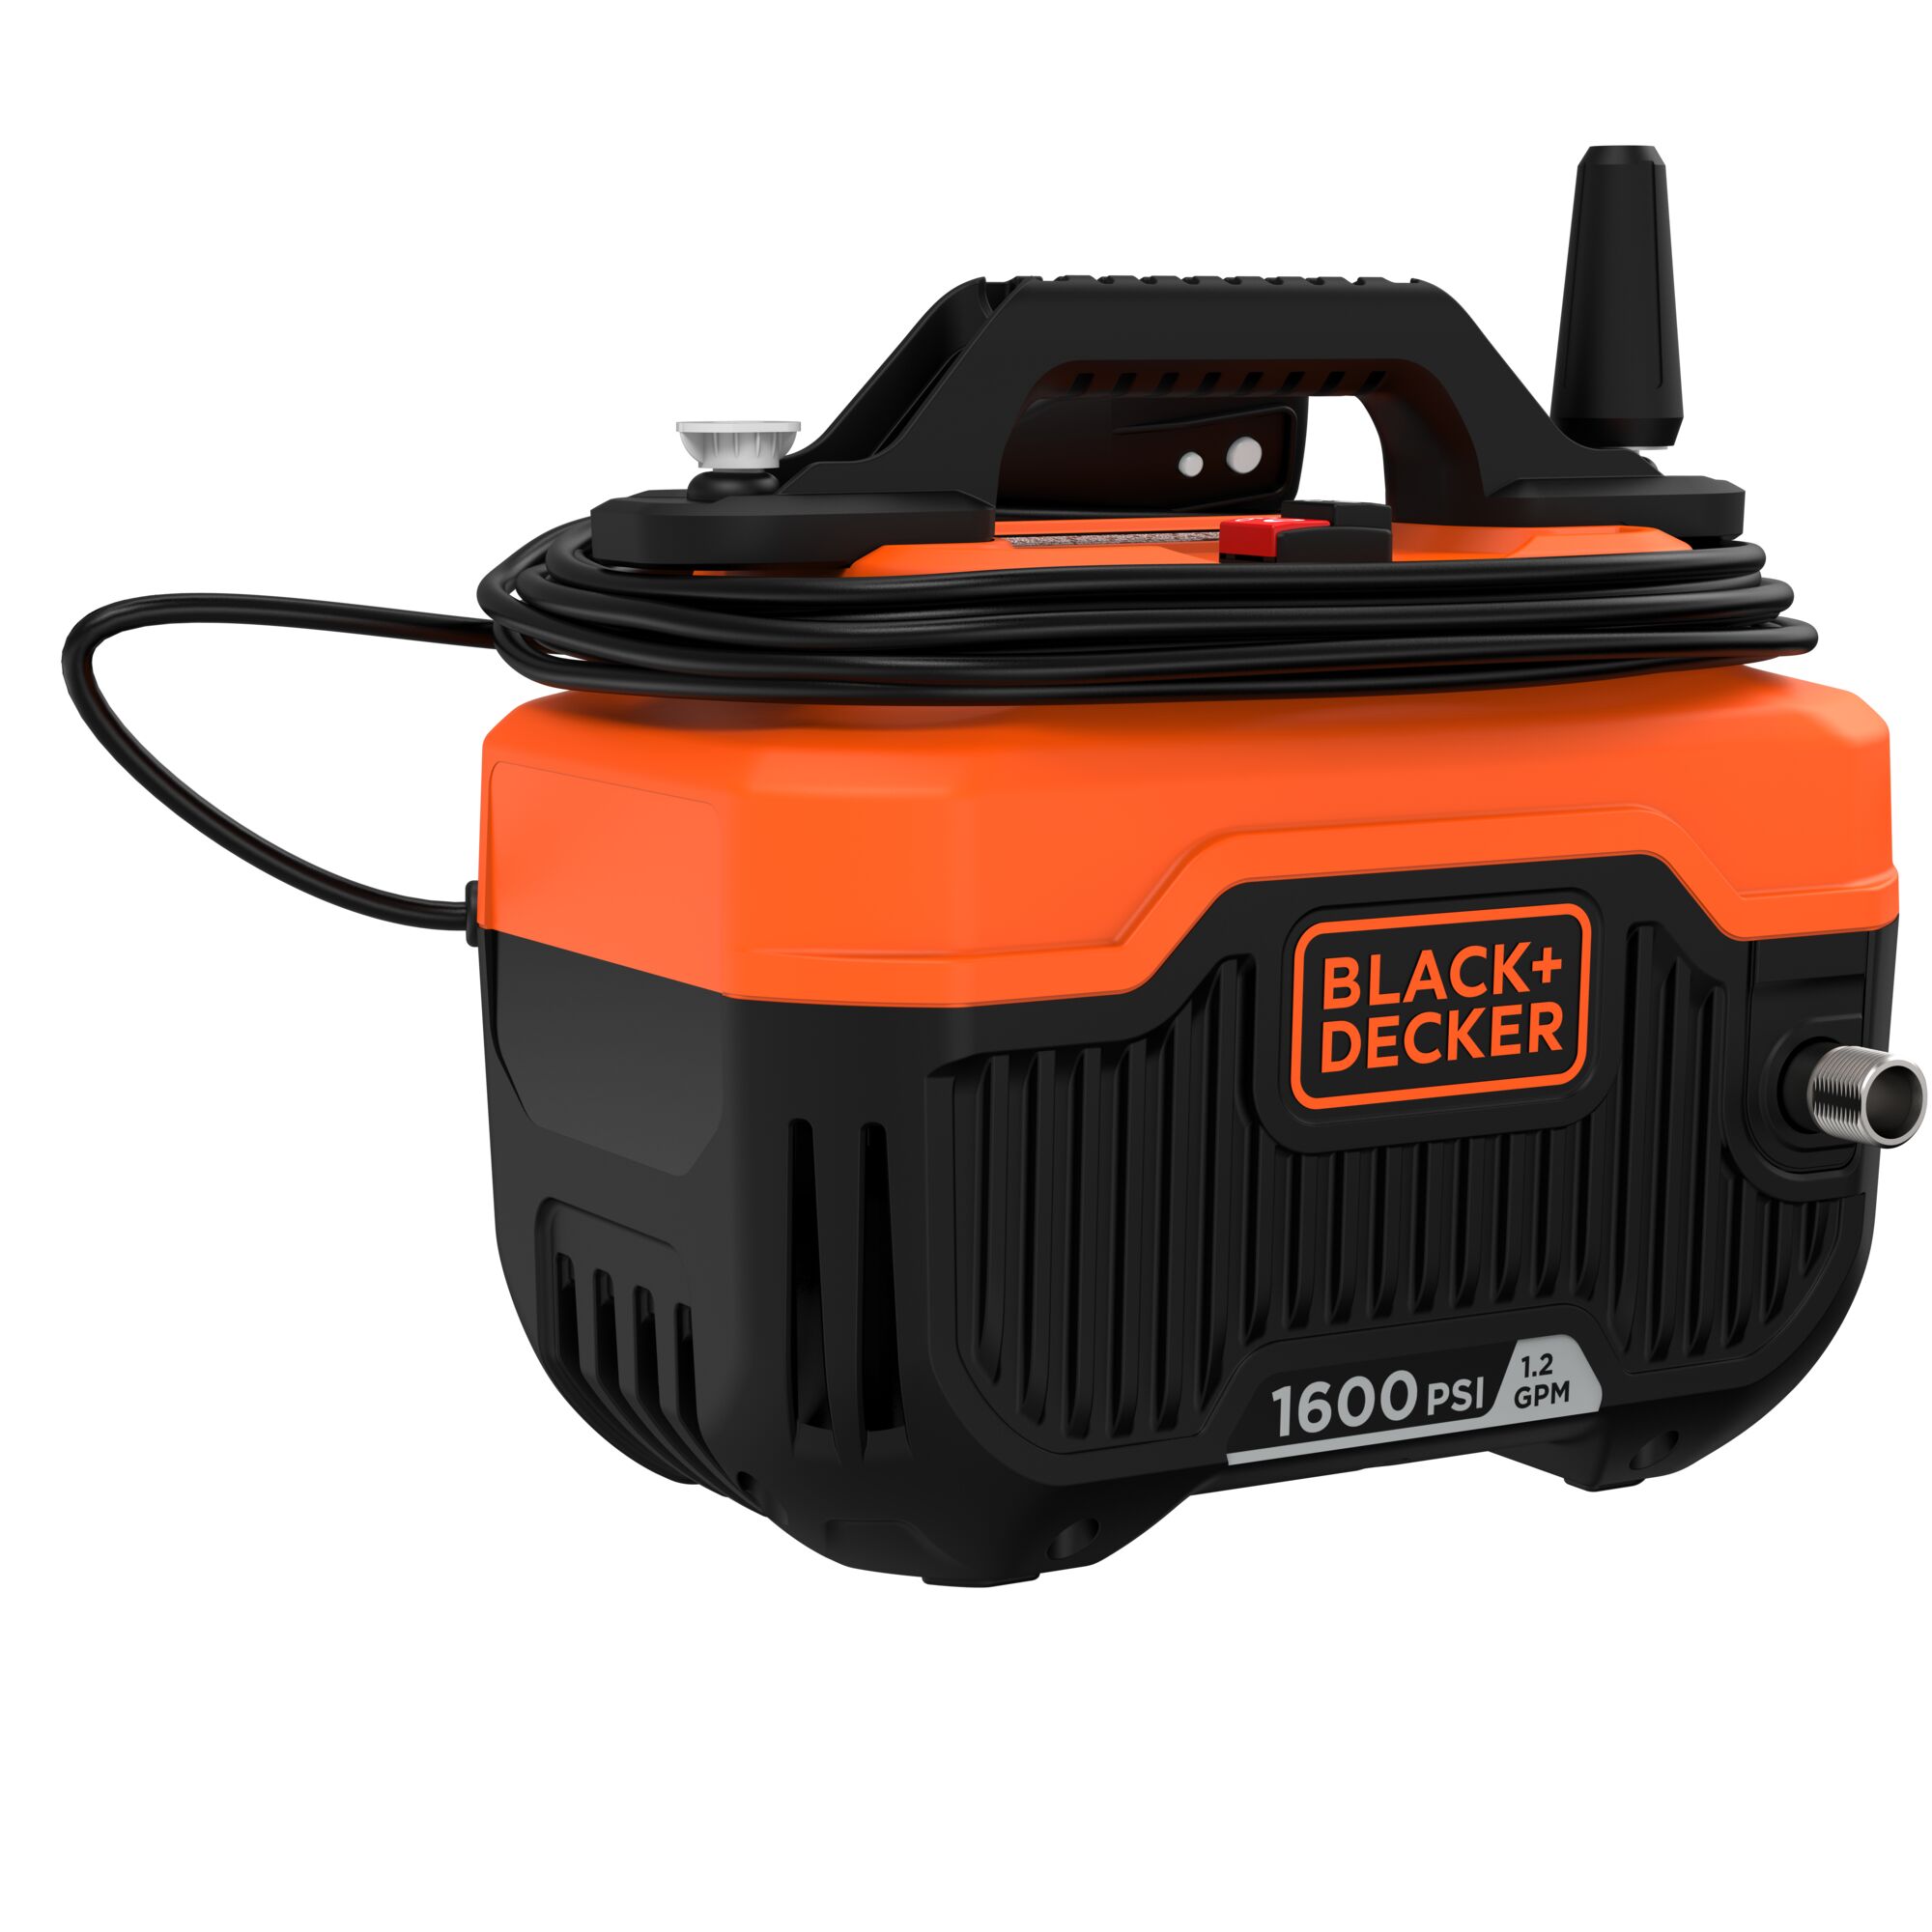 Black and decker 1600-Psi 1.2-Gpm Pressure Washer